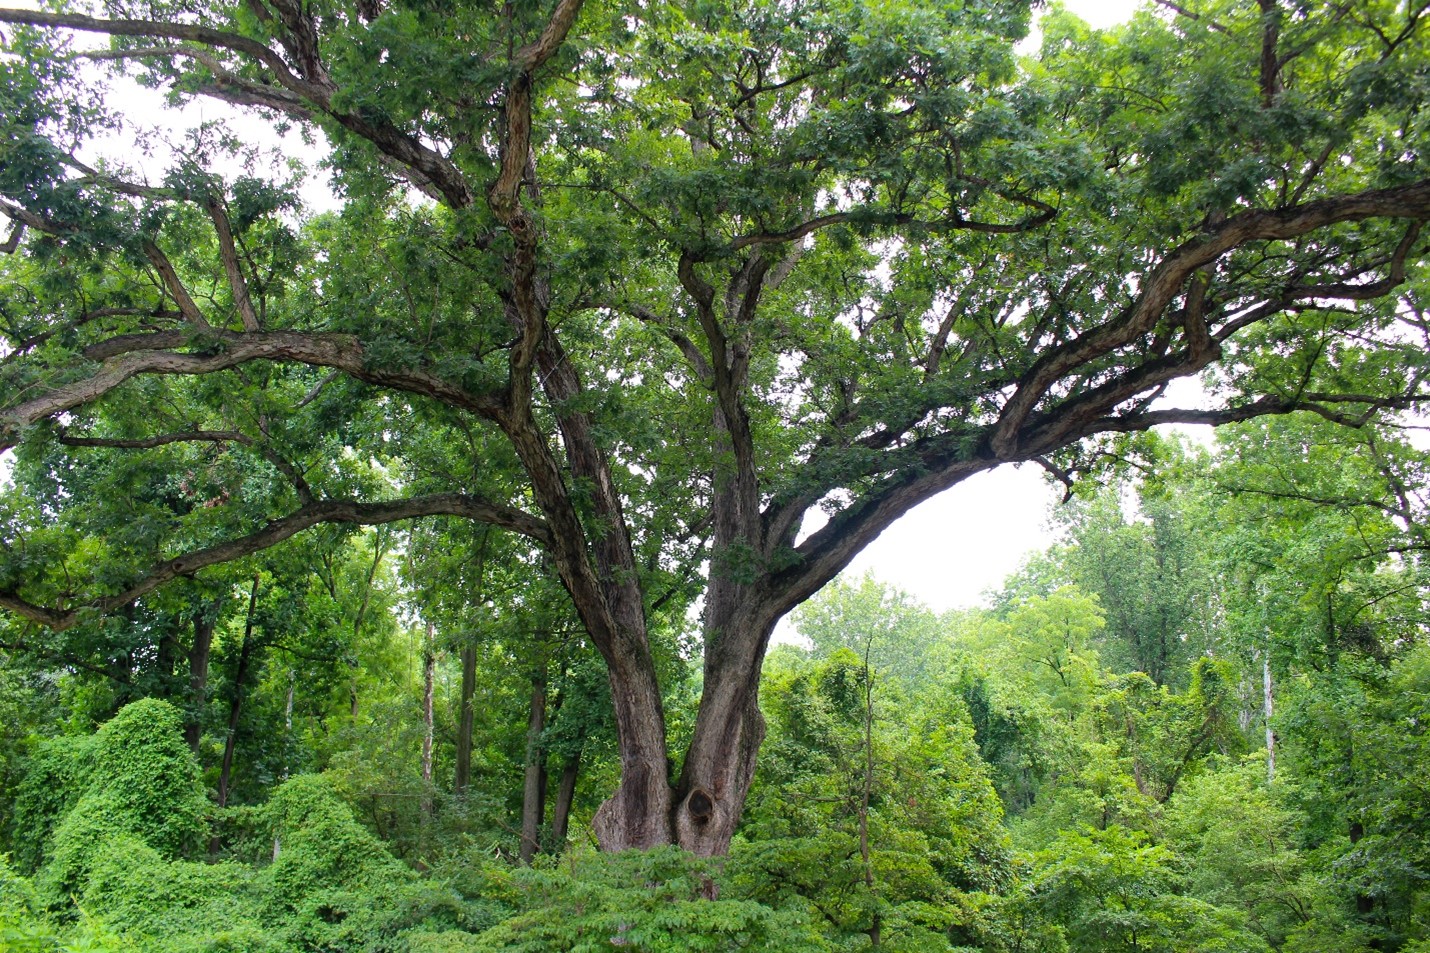 The Linden Oak